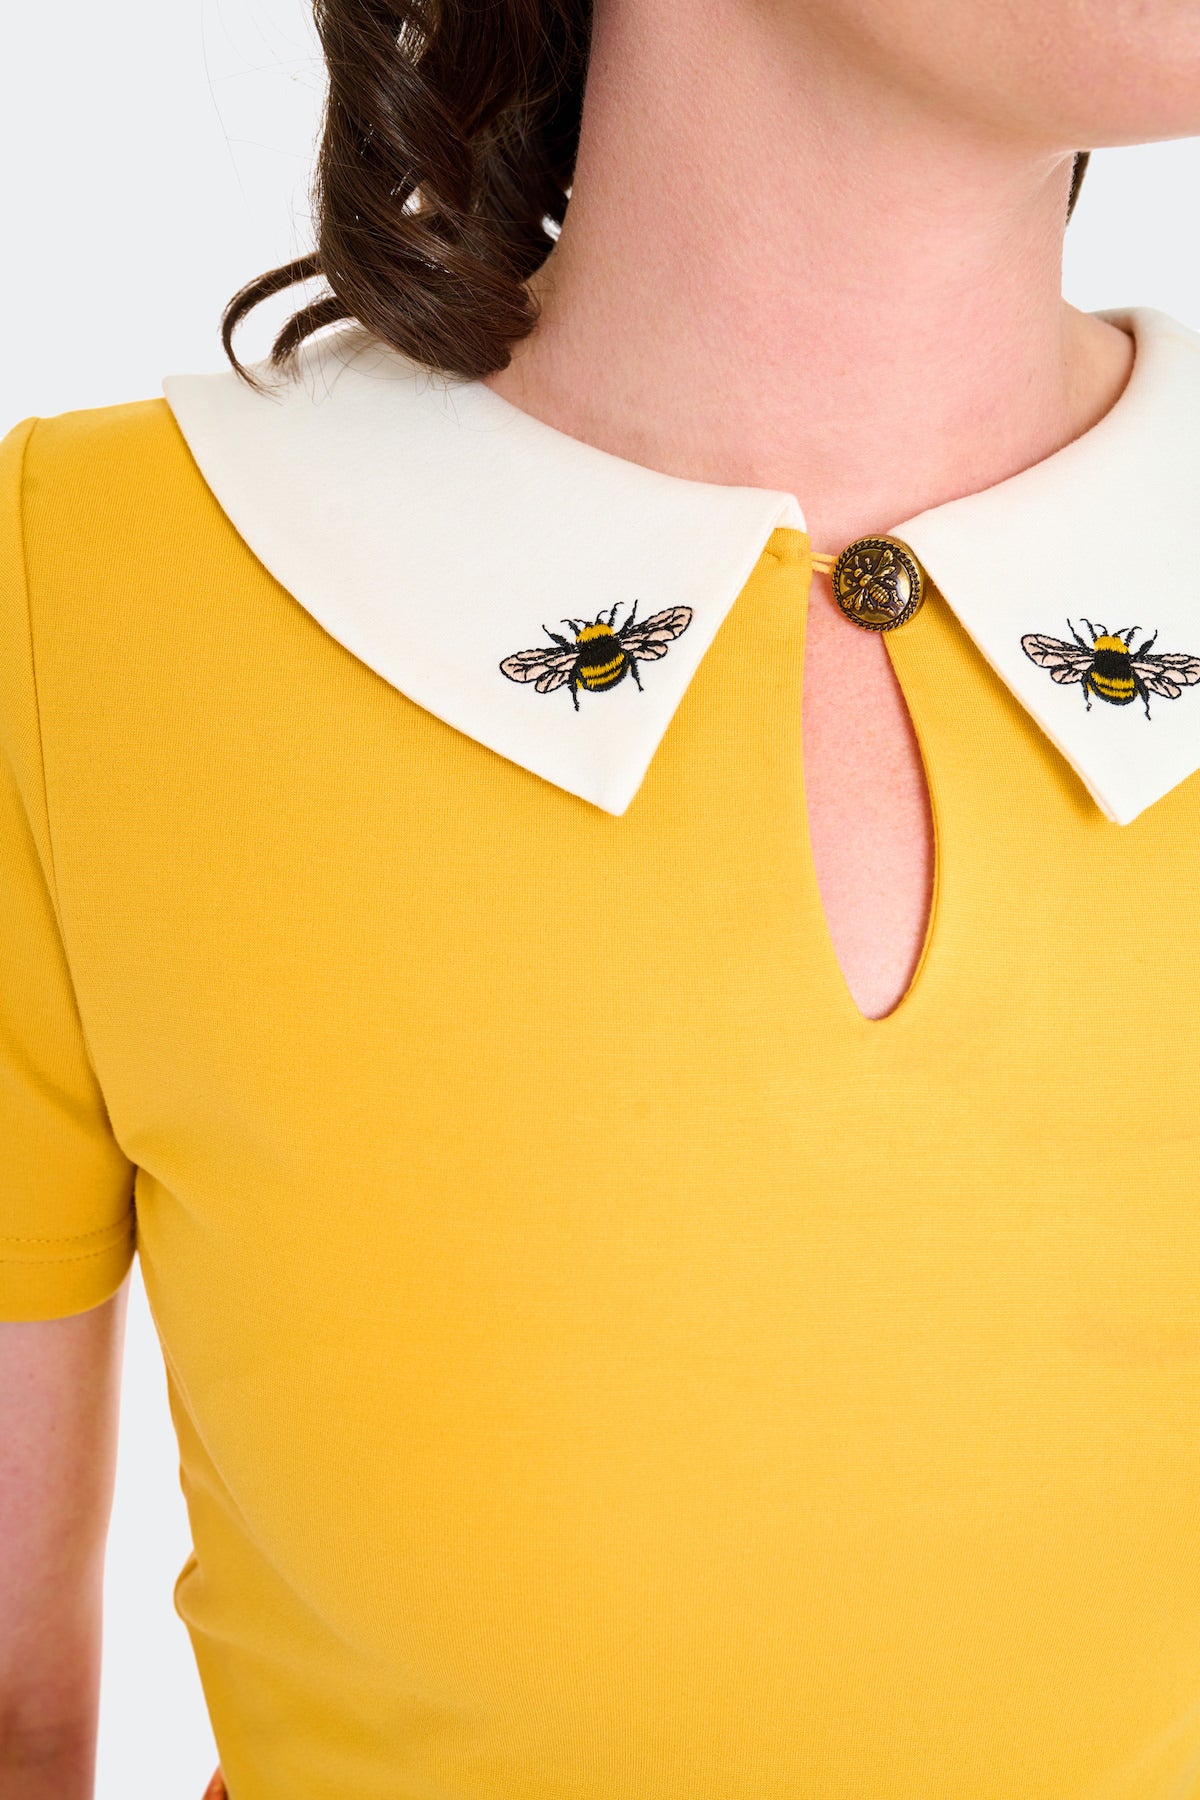 Honeybee Chic Knit Top